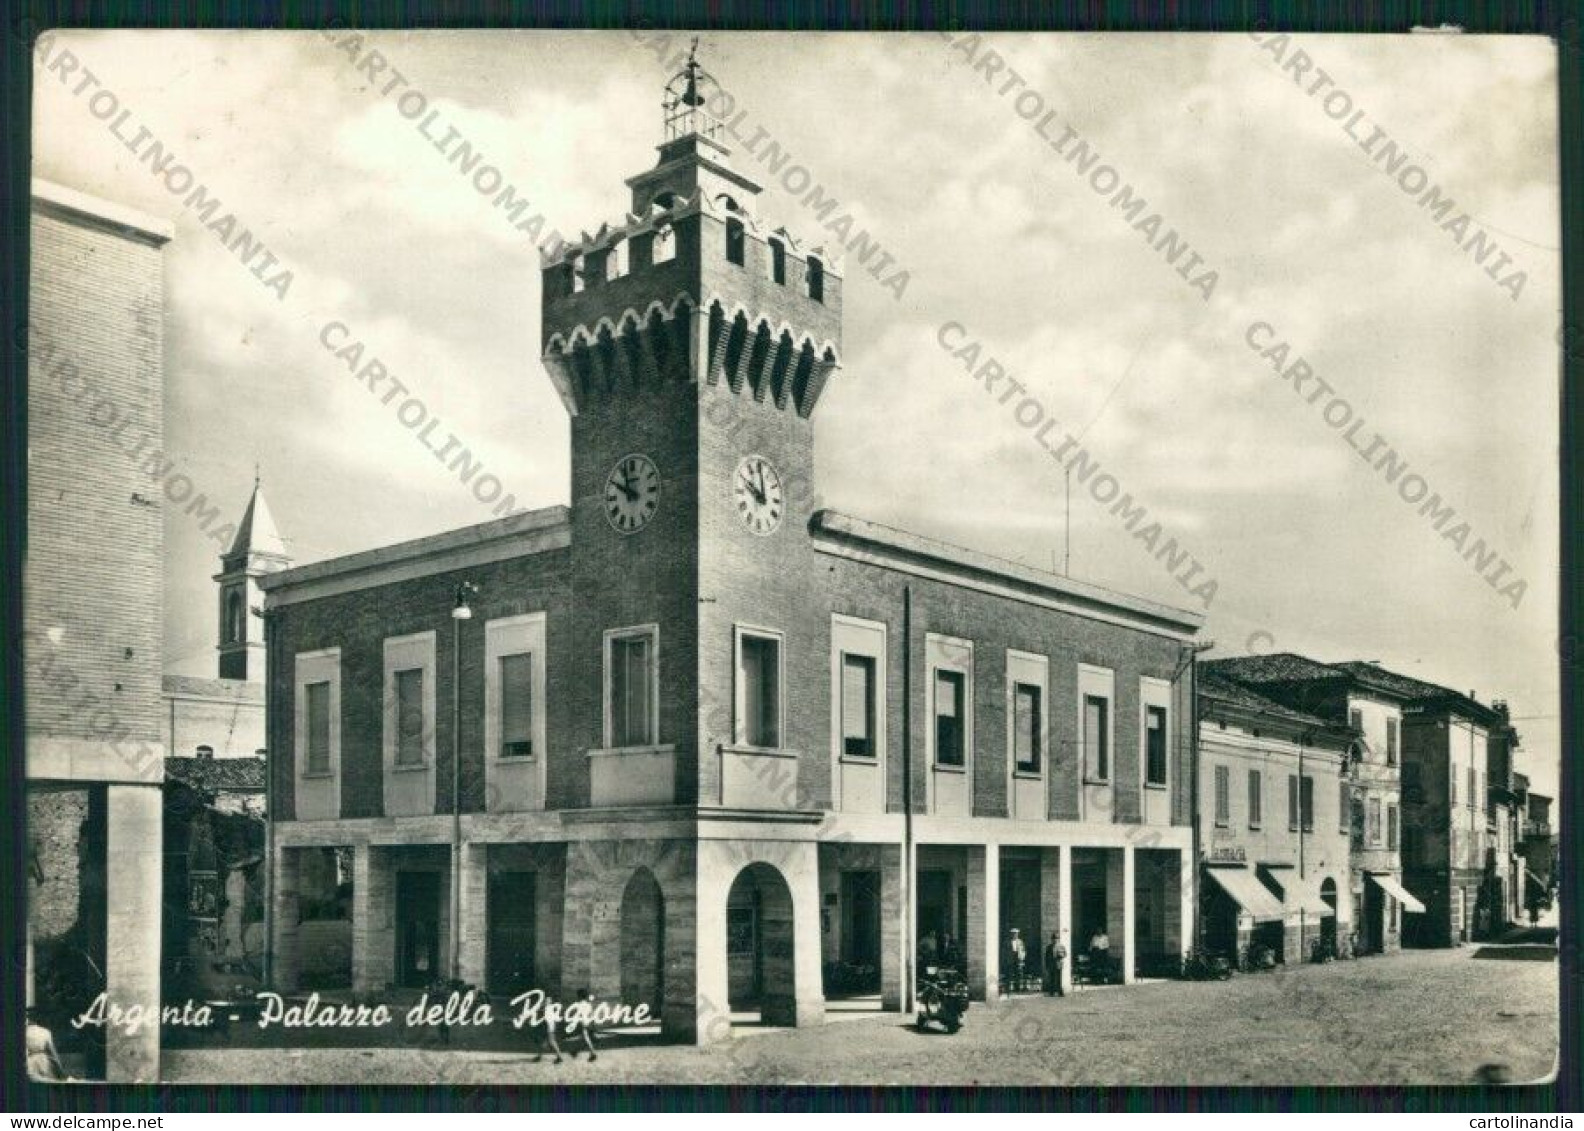 Ferrara Argenta Palazzo Regione PIEGHINE Foto FG Cartolina ZK1887 - Ferrara